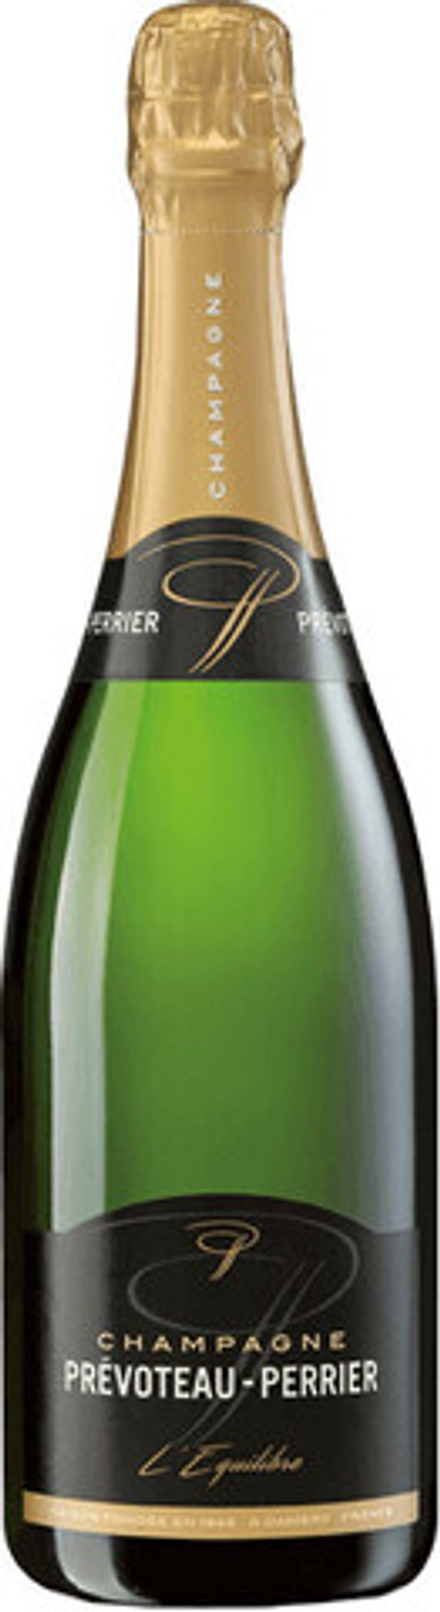 Шампанское Champagne Prevoteau-Perrier L'Equilibre Brut, 0,75 л.